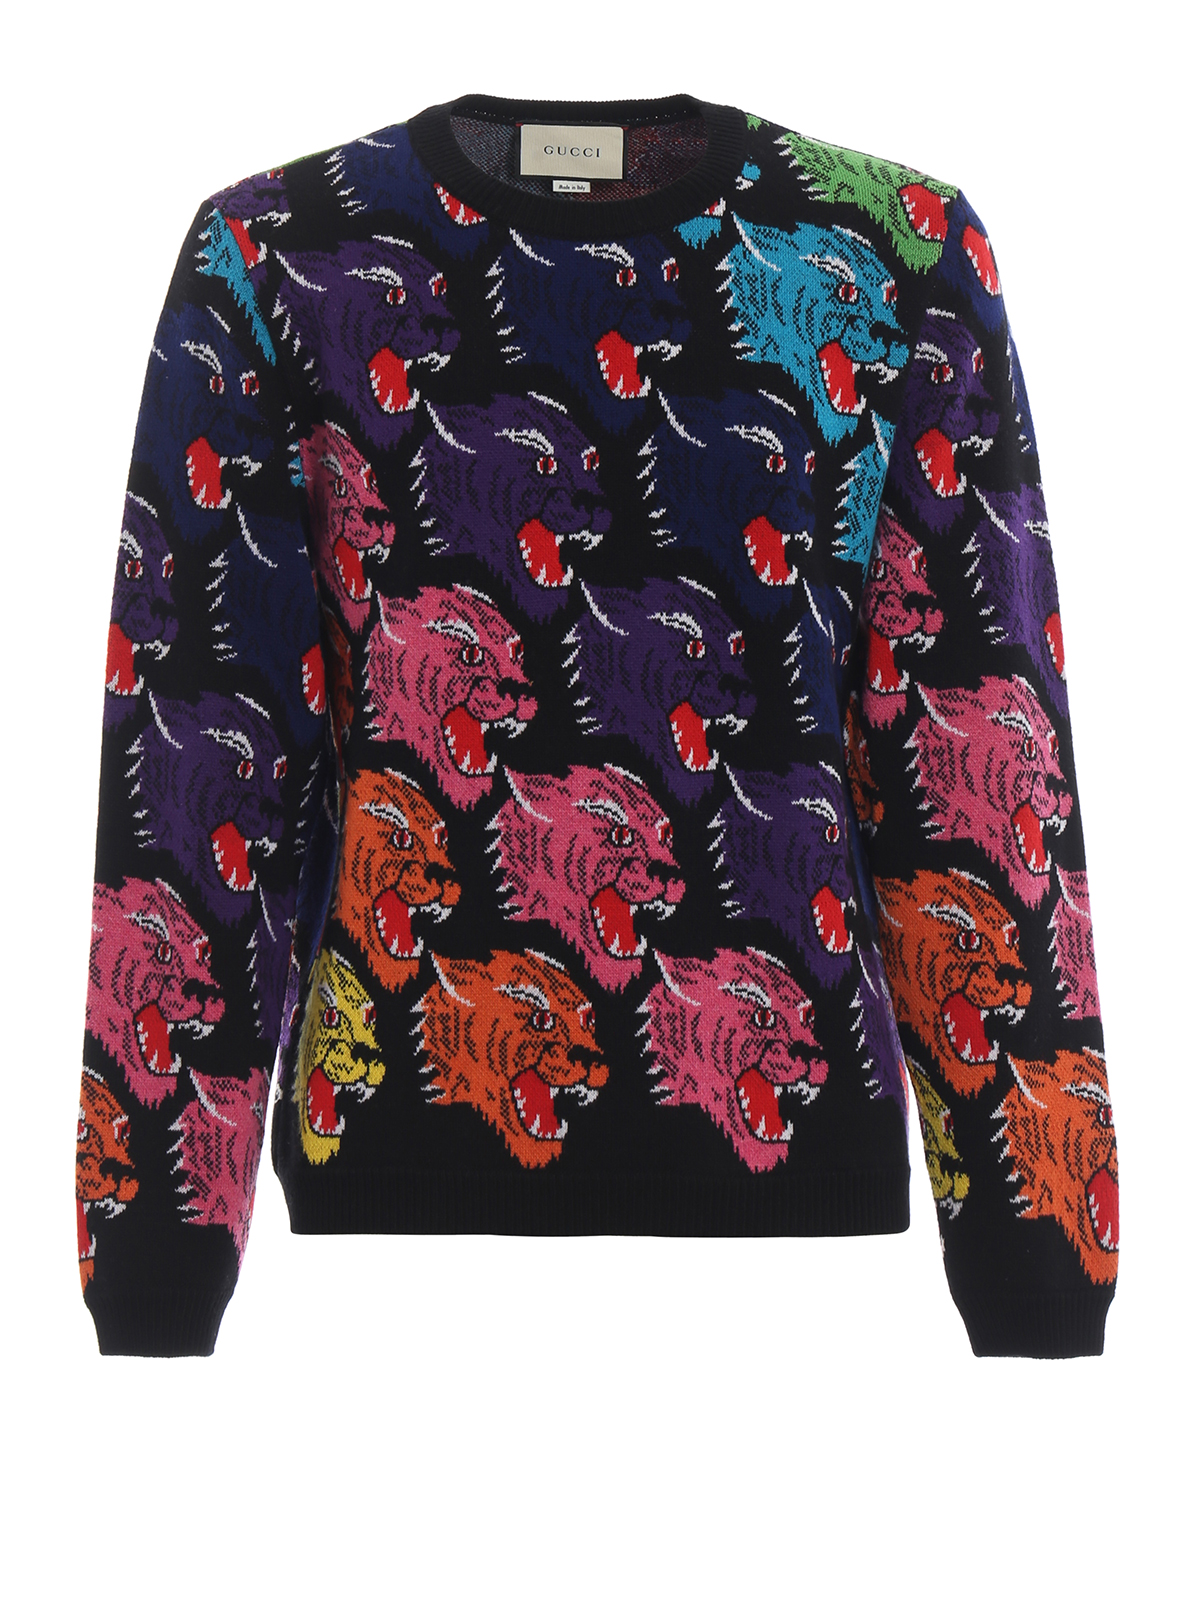 Gucci, Sweaters, Gucci Tiger Intarsia Sweater